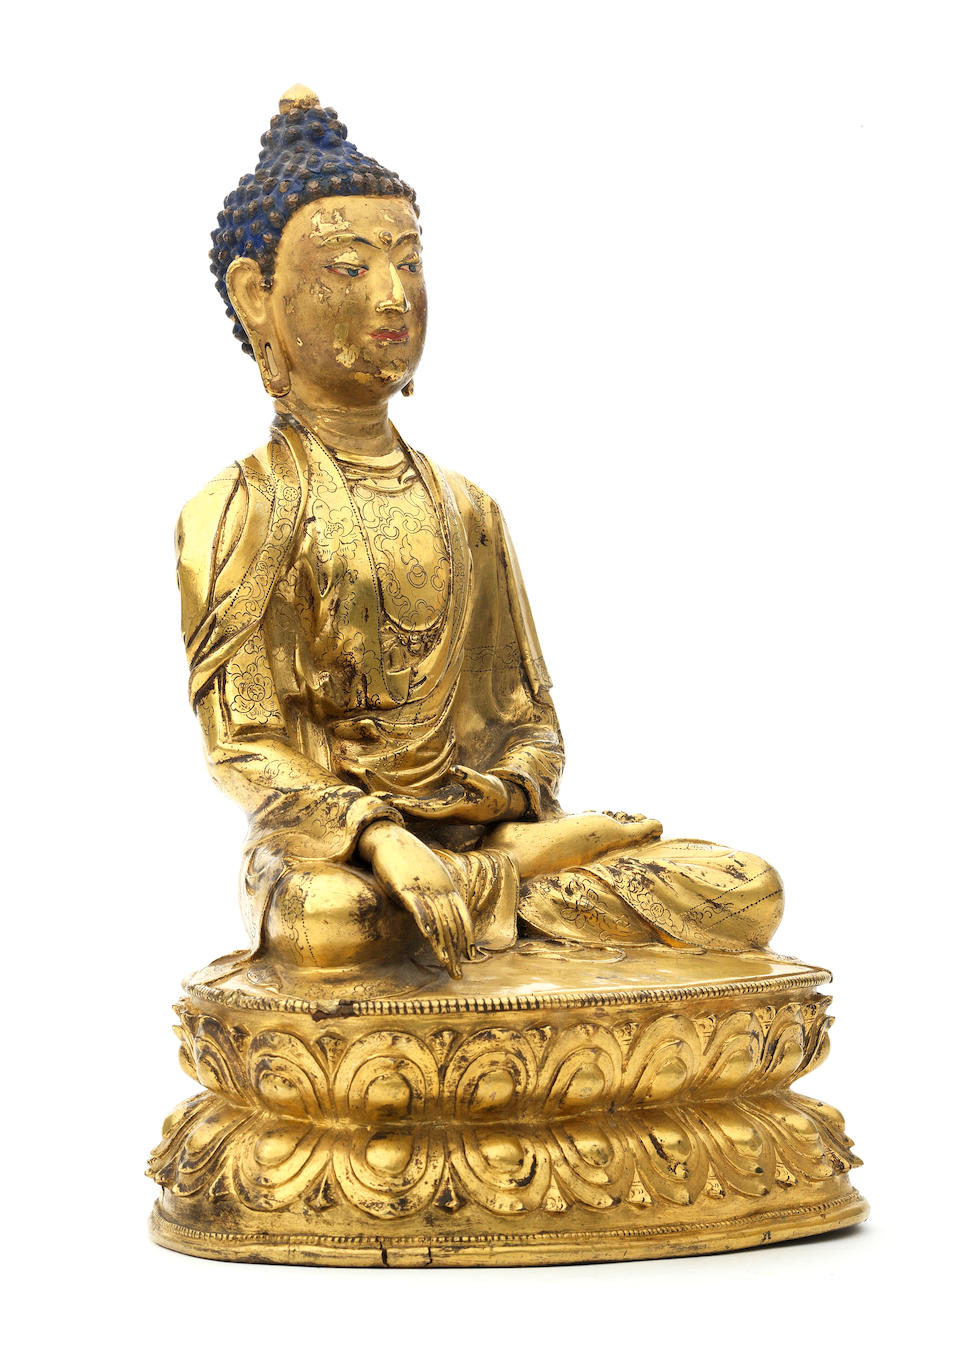 A large and rare gilt copper-alloy figure of Shakyamuni Buddha Tibet, circa 16th century